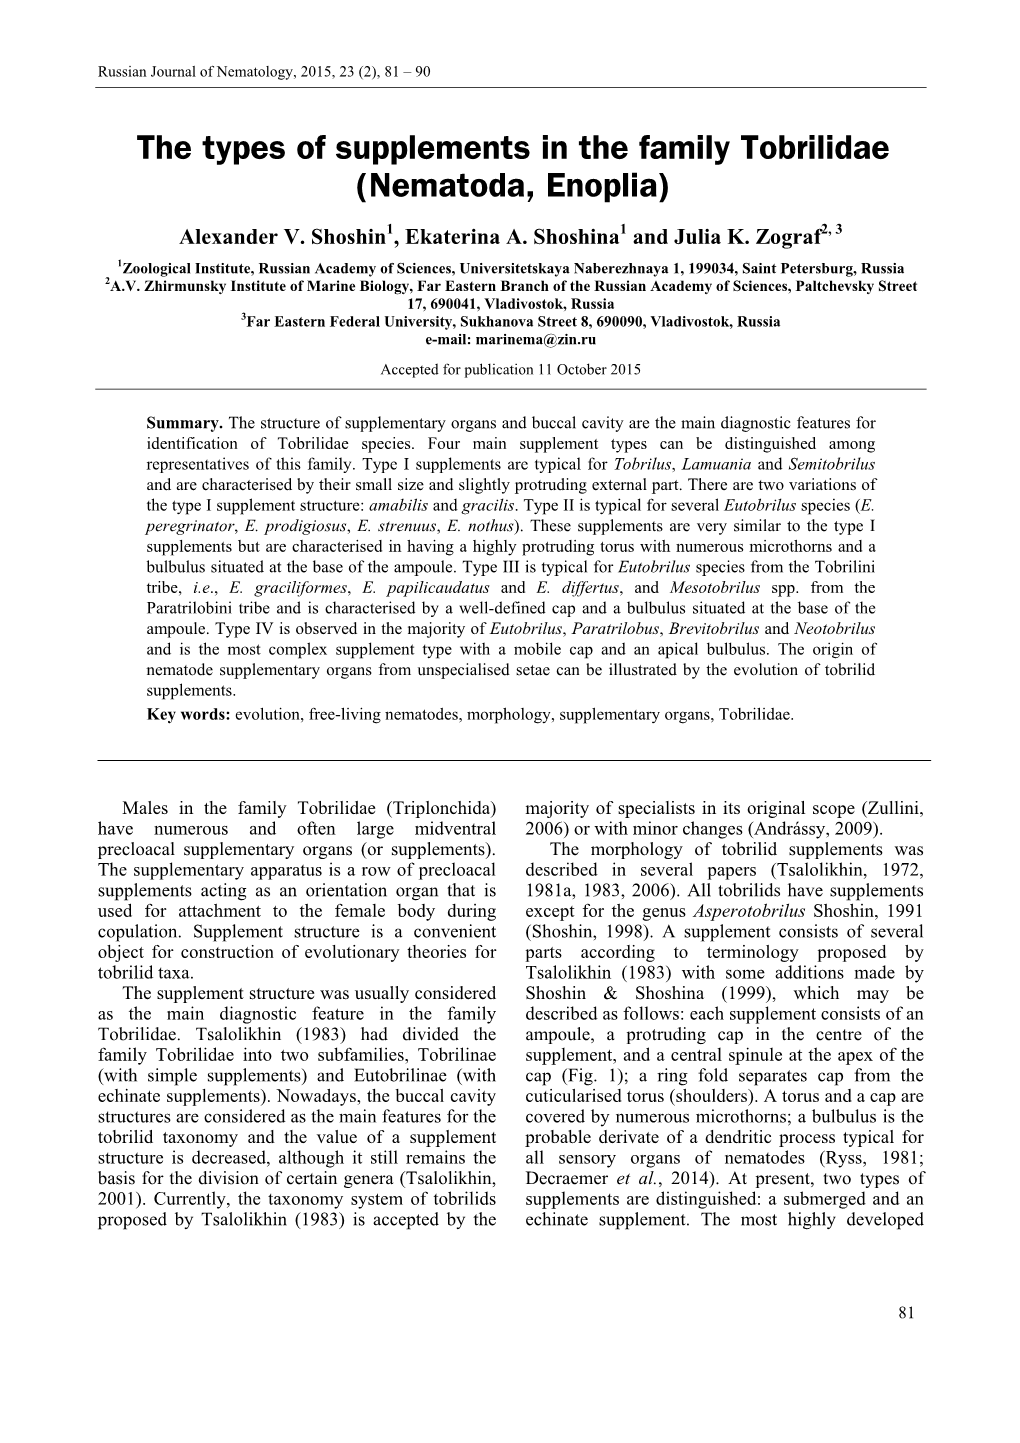 The Types of Supplements in the Family Tobrilidae (Nematoda, Enoplia) Alexander V